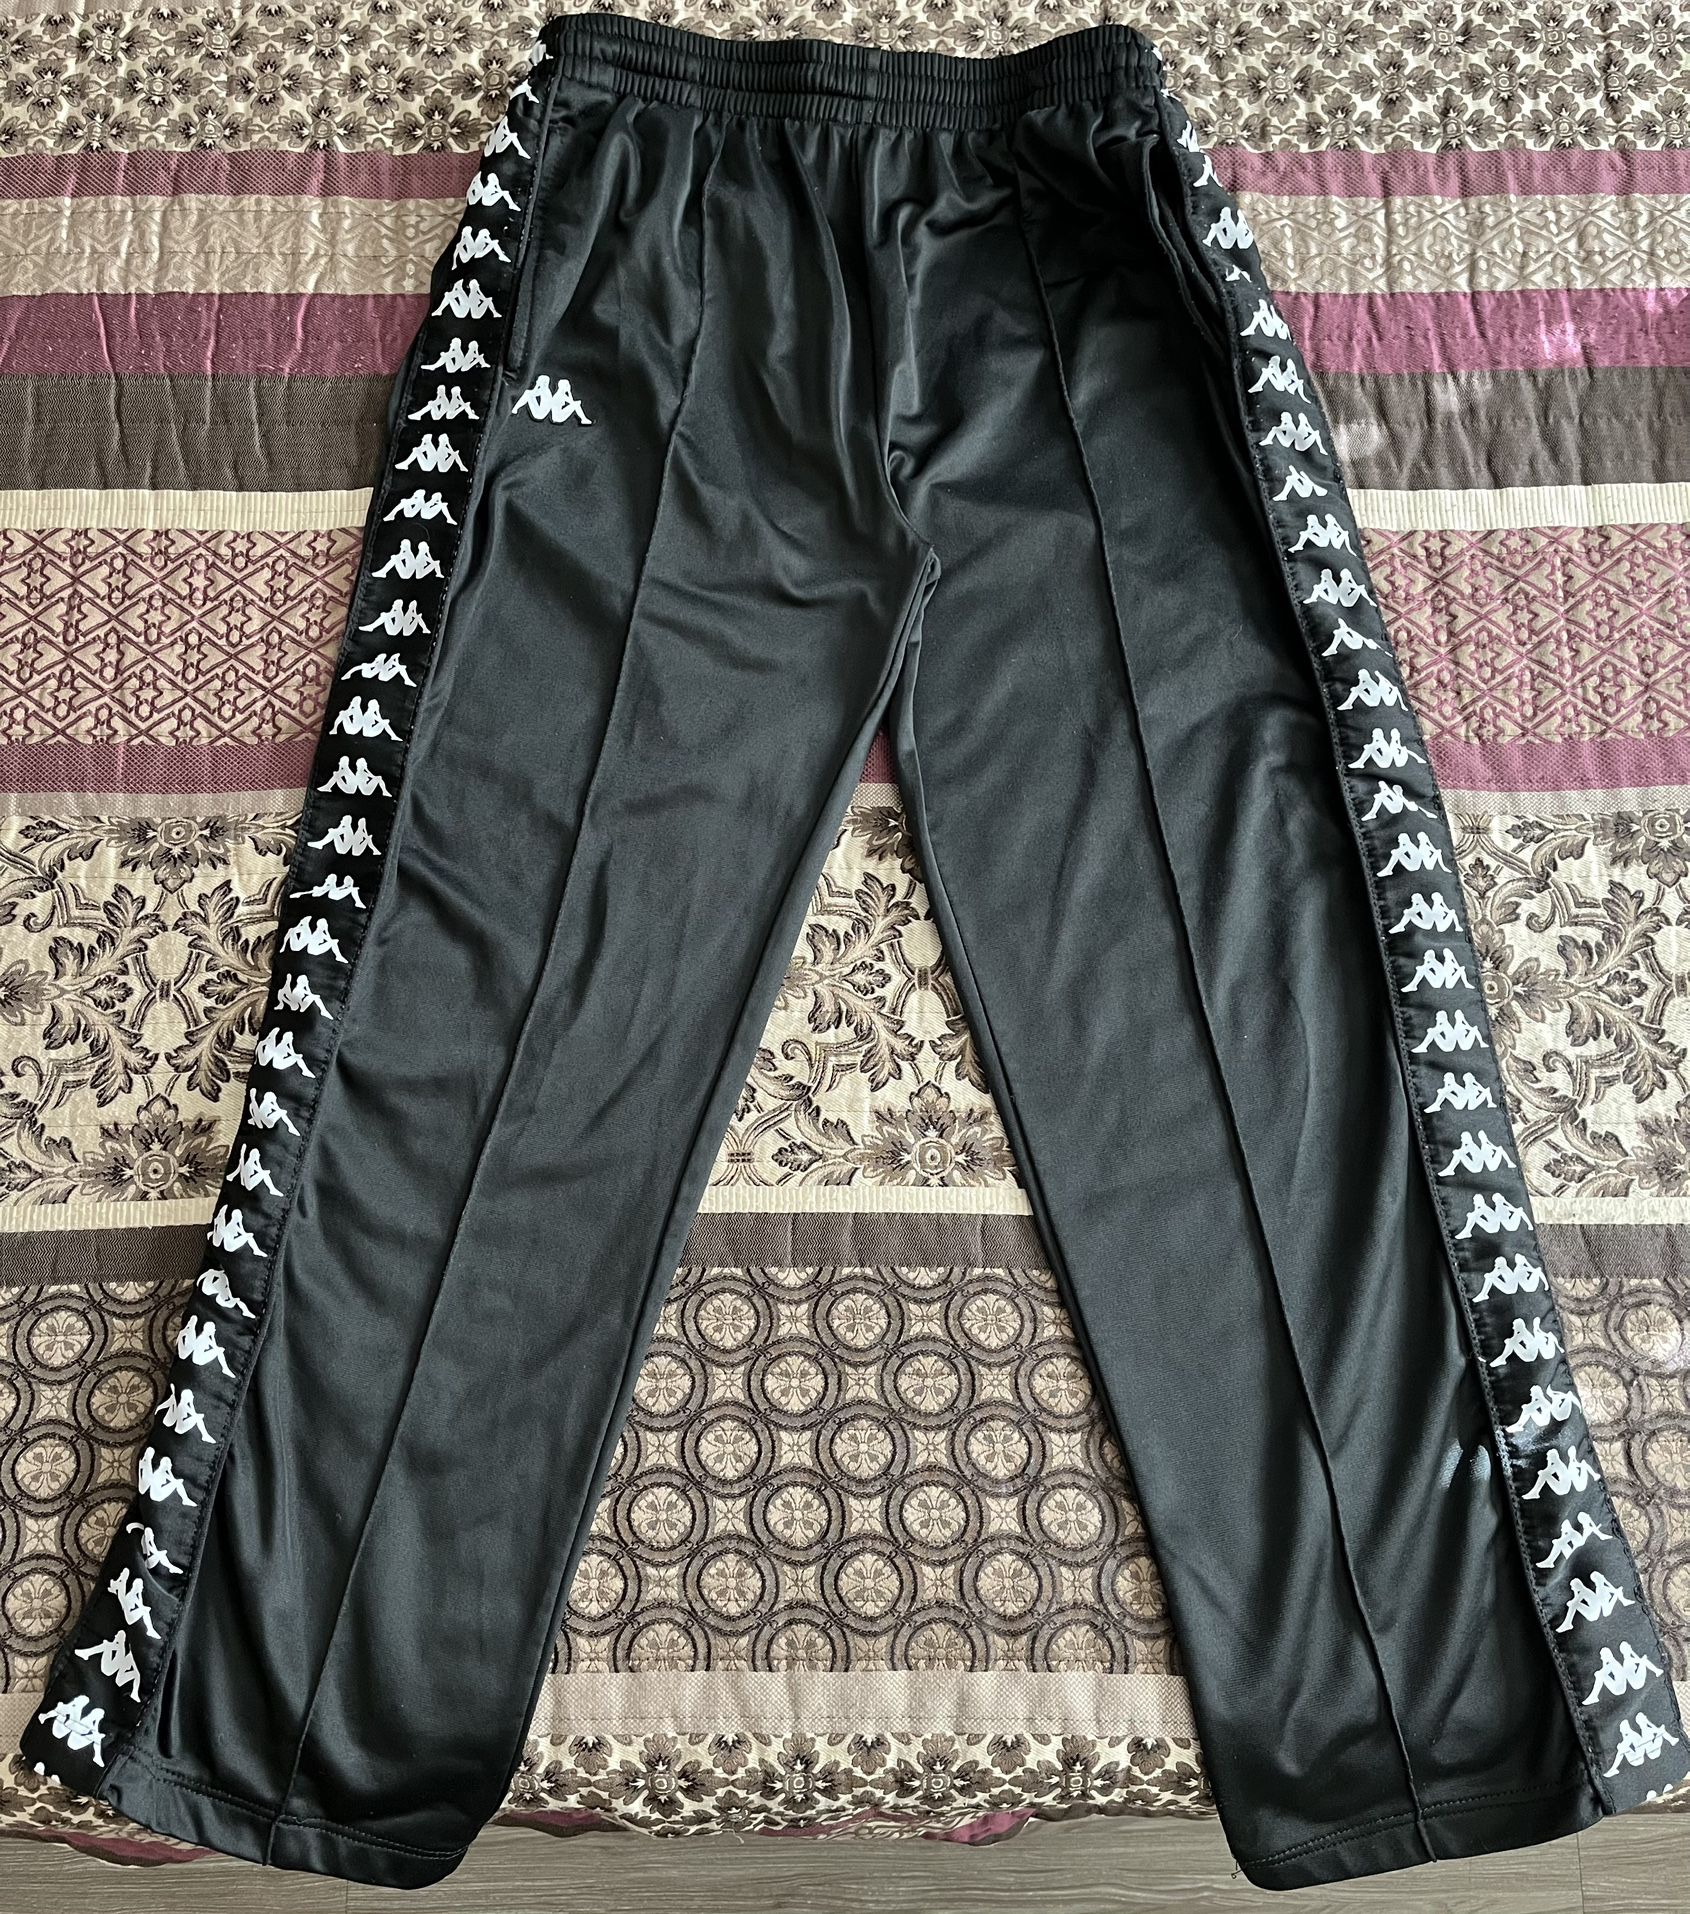 Arctic Il Støvet Kappa Track Pants Men's Size XL for Sale in Whittier, CA - OfferUp